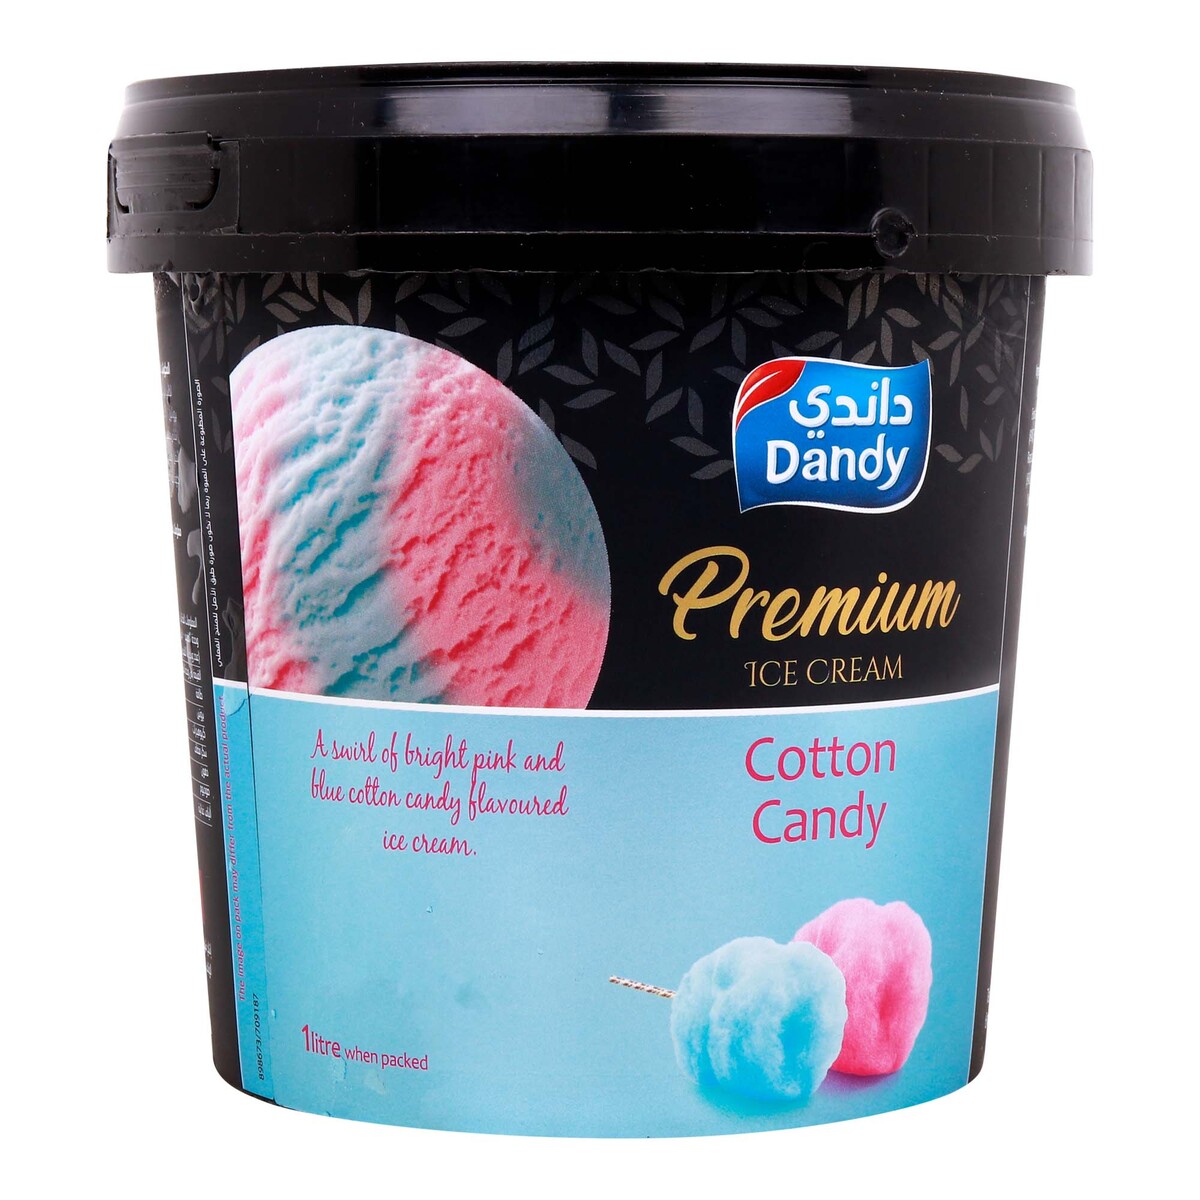 Dandy Premium Cotton Candy Ice Cream, 1 Litre